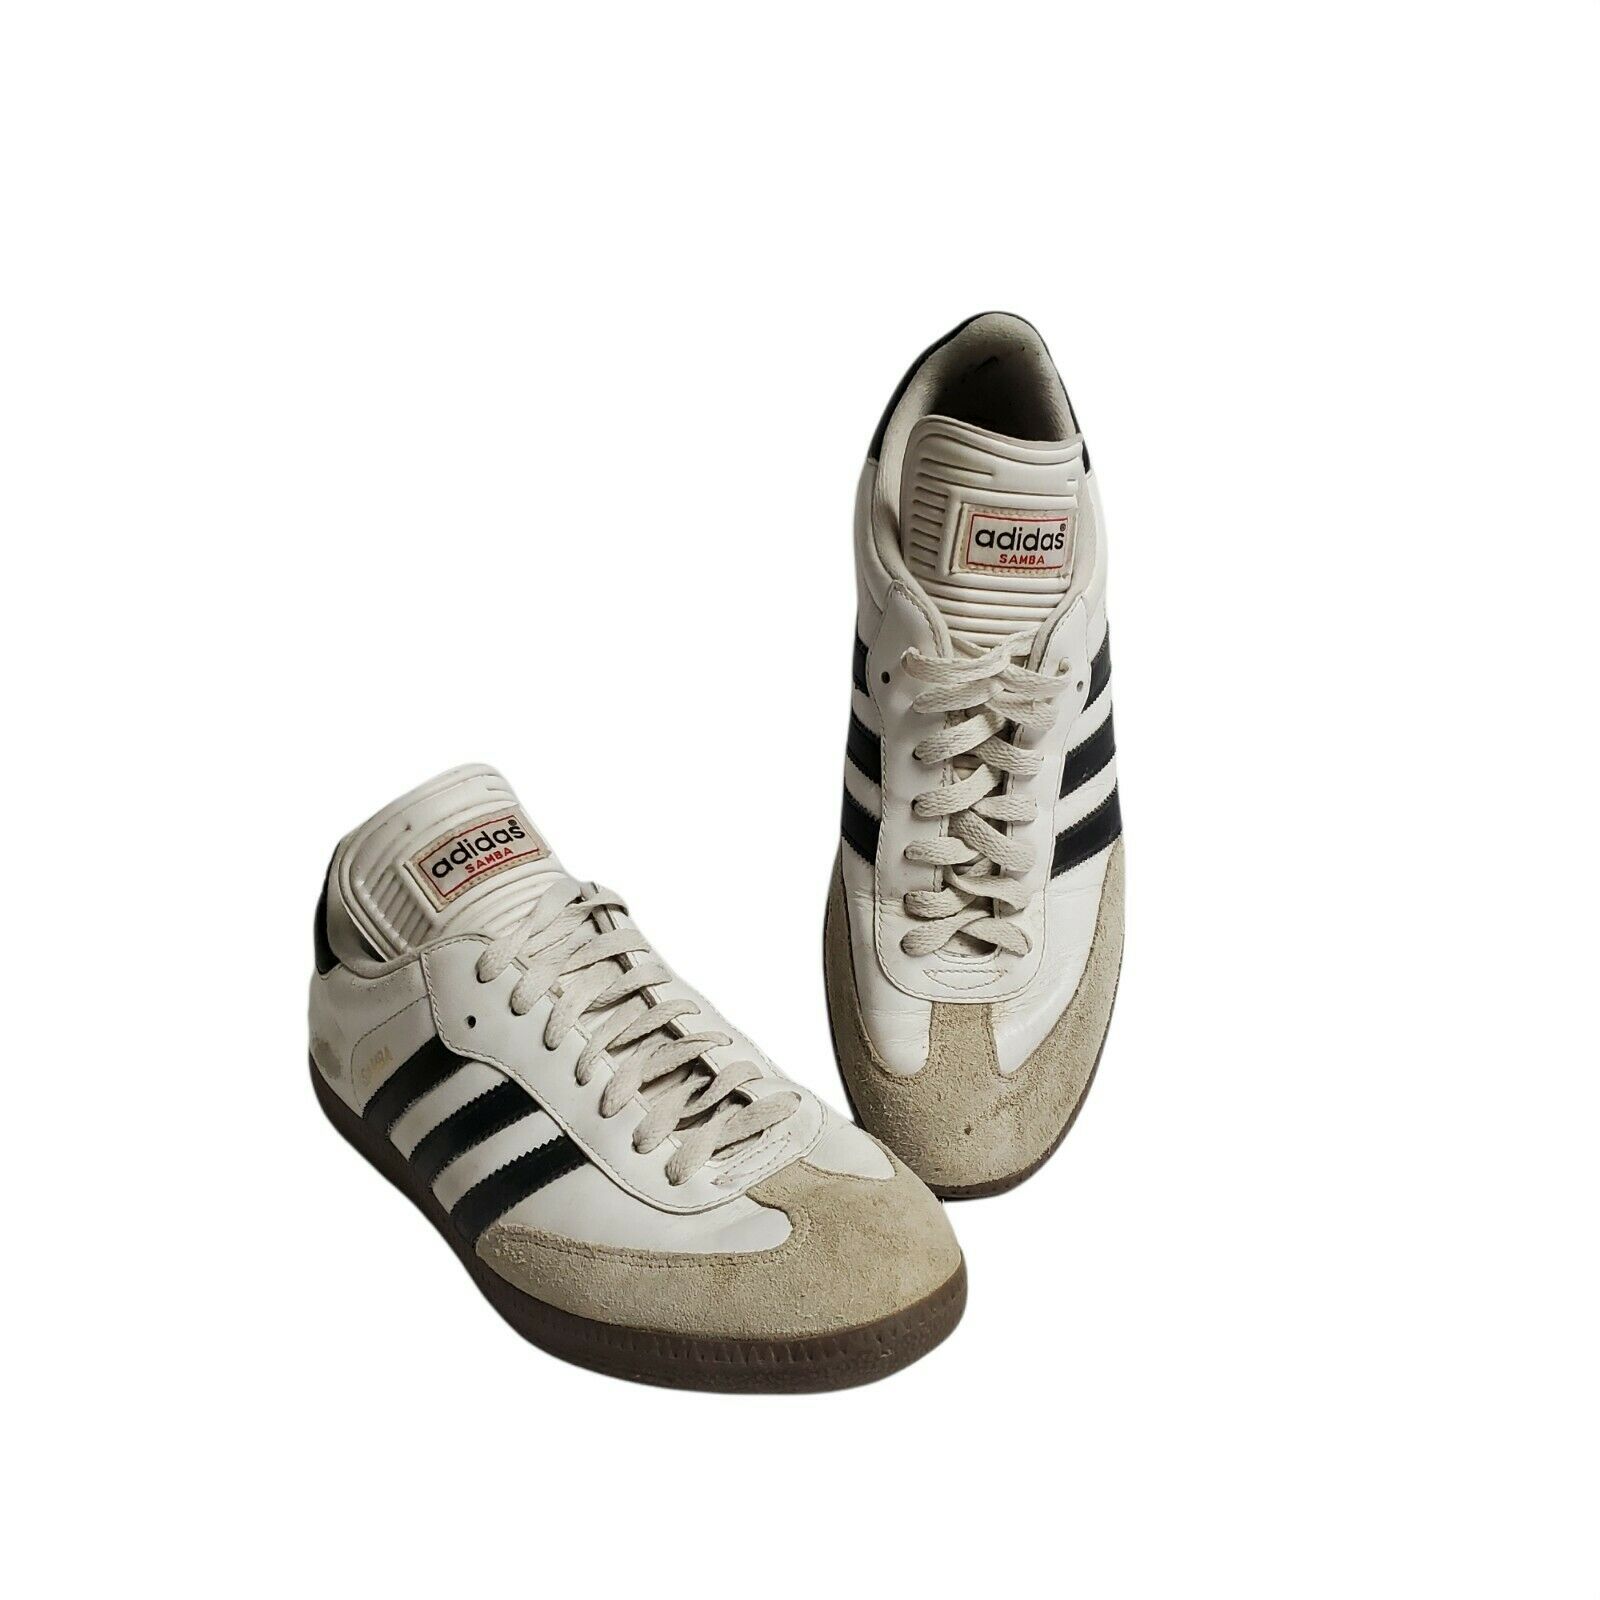 Adidas Samba Classic OG Mens US size 10.5 White Sneakers Shoes 772109